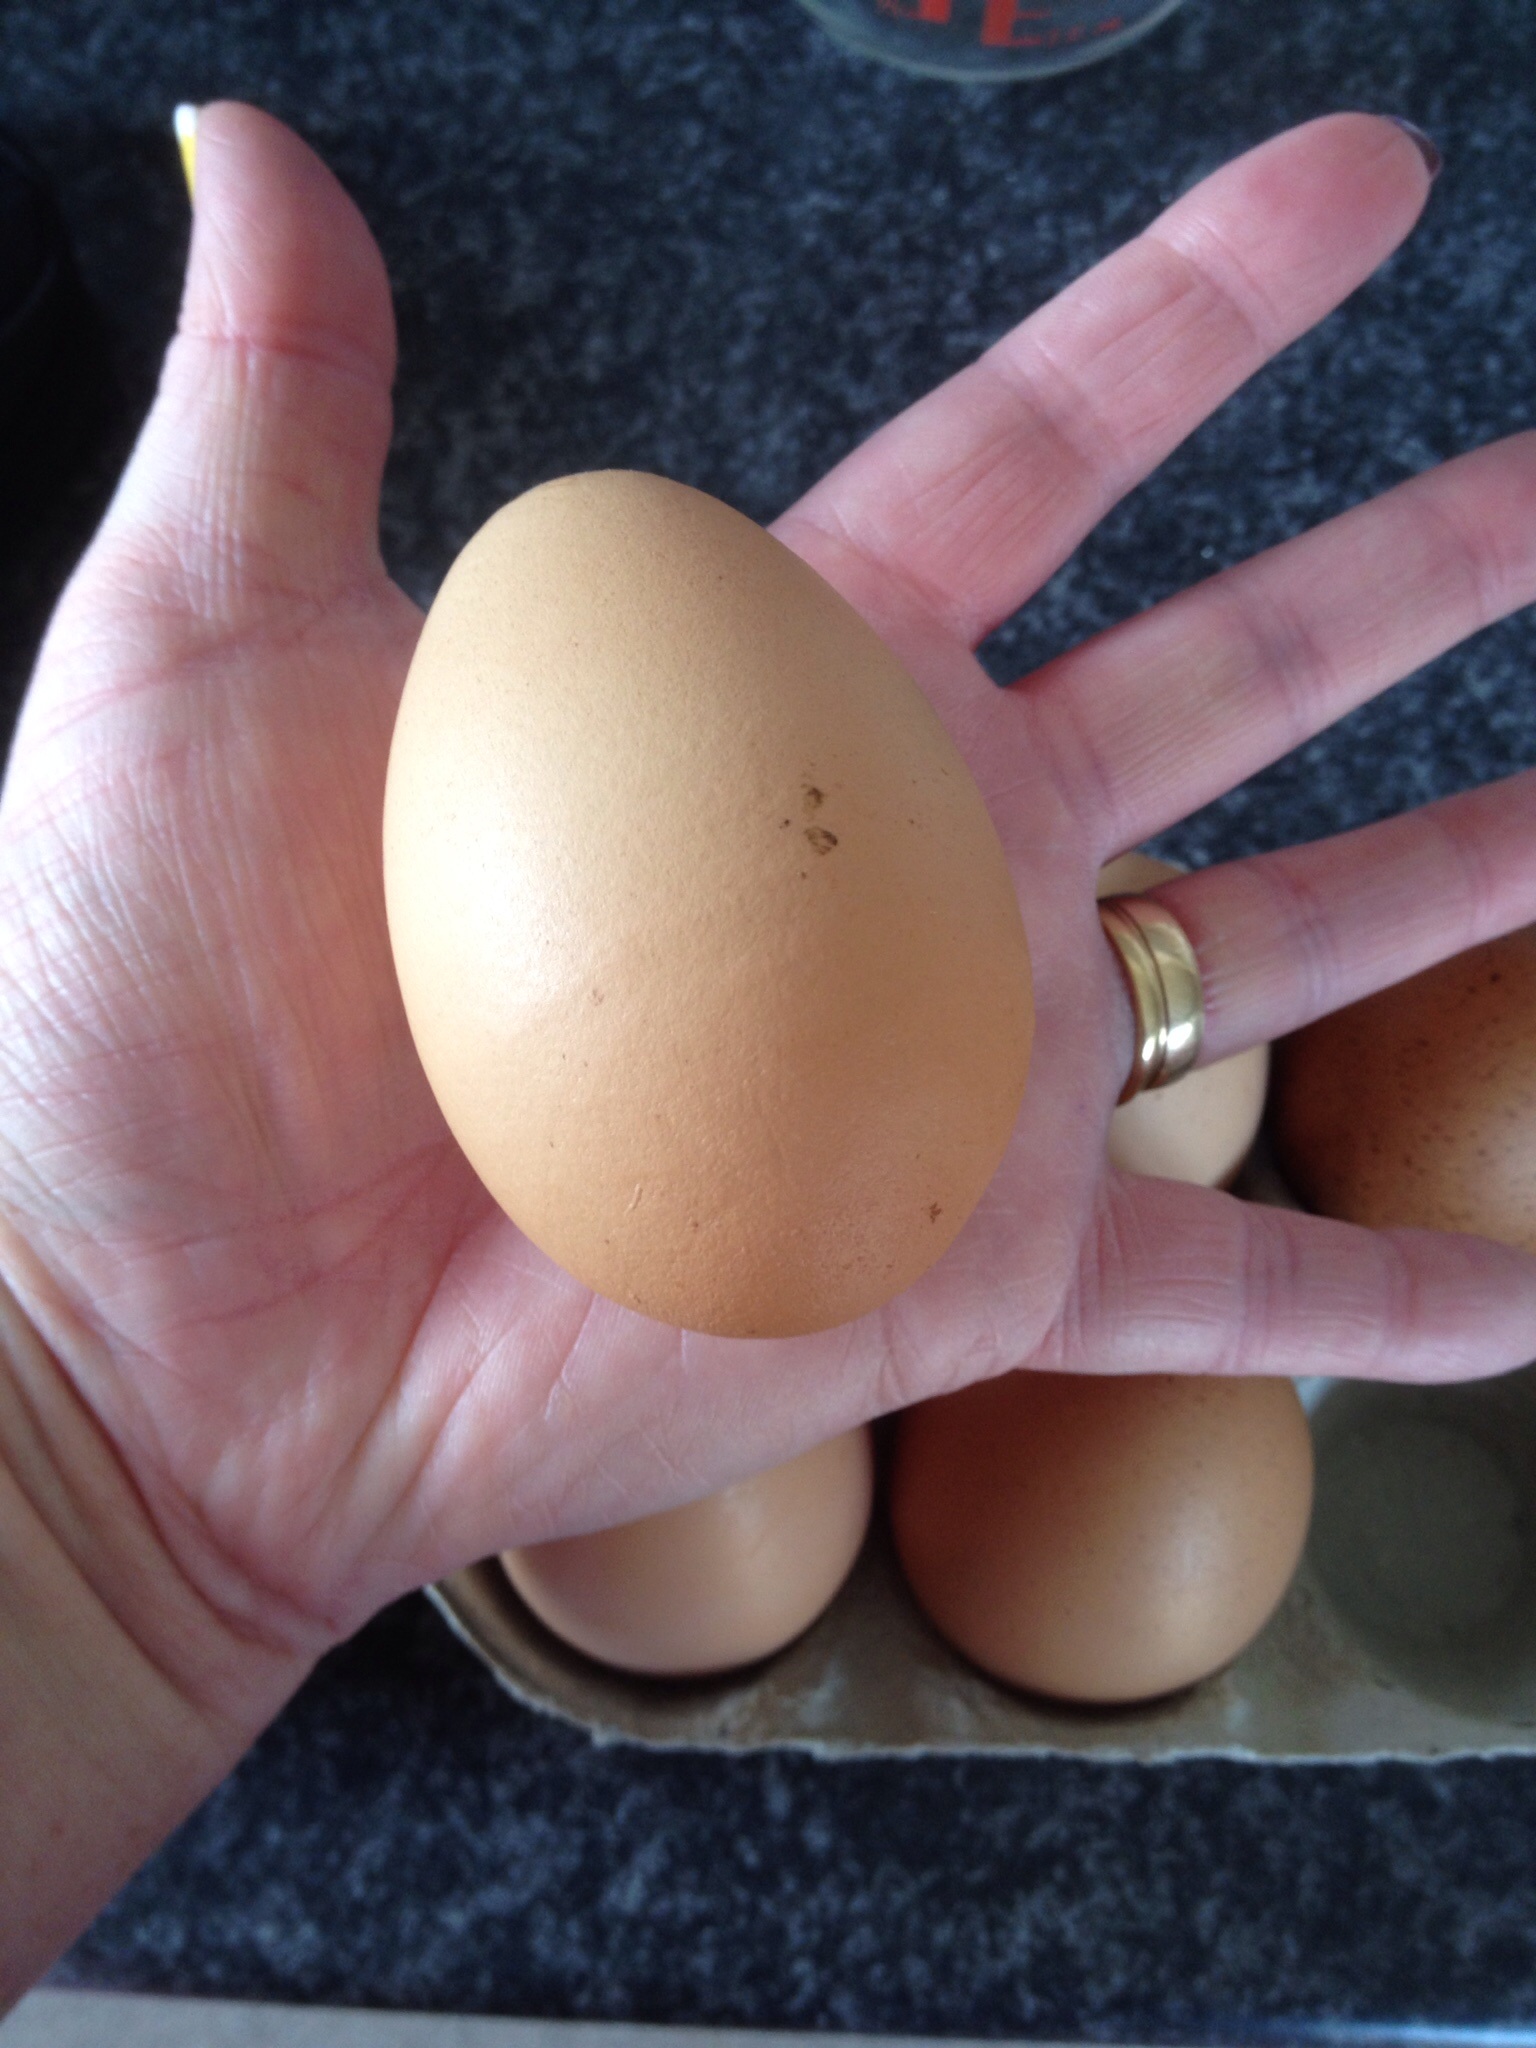 Rachel Sturman-Panters Rhodeländer legen gigantische Eier